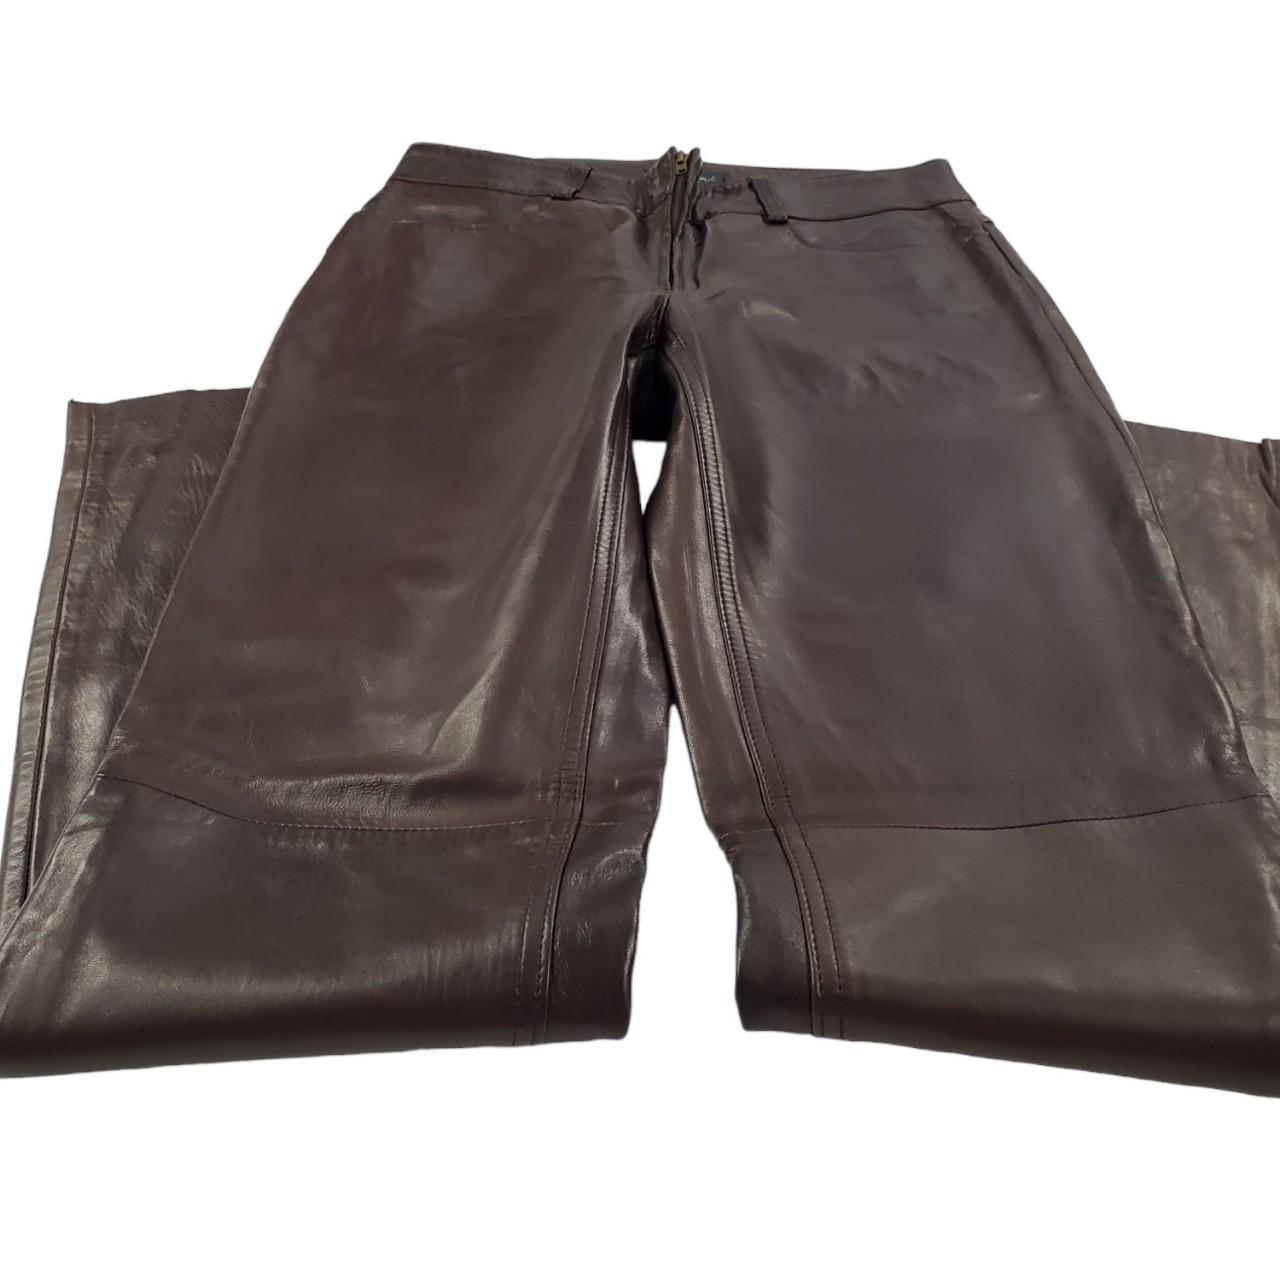 Y2K banana republic softest leather pants…perfect rise/boot cut